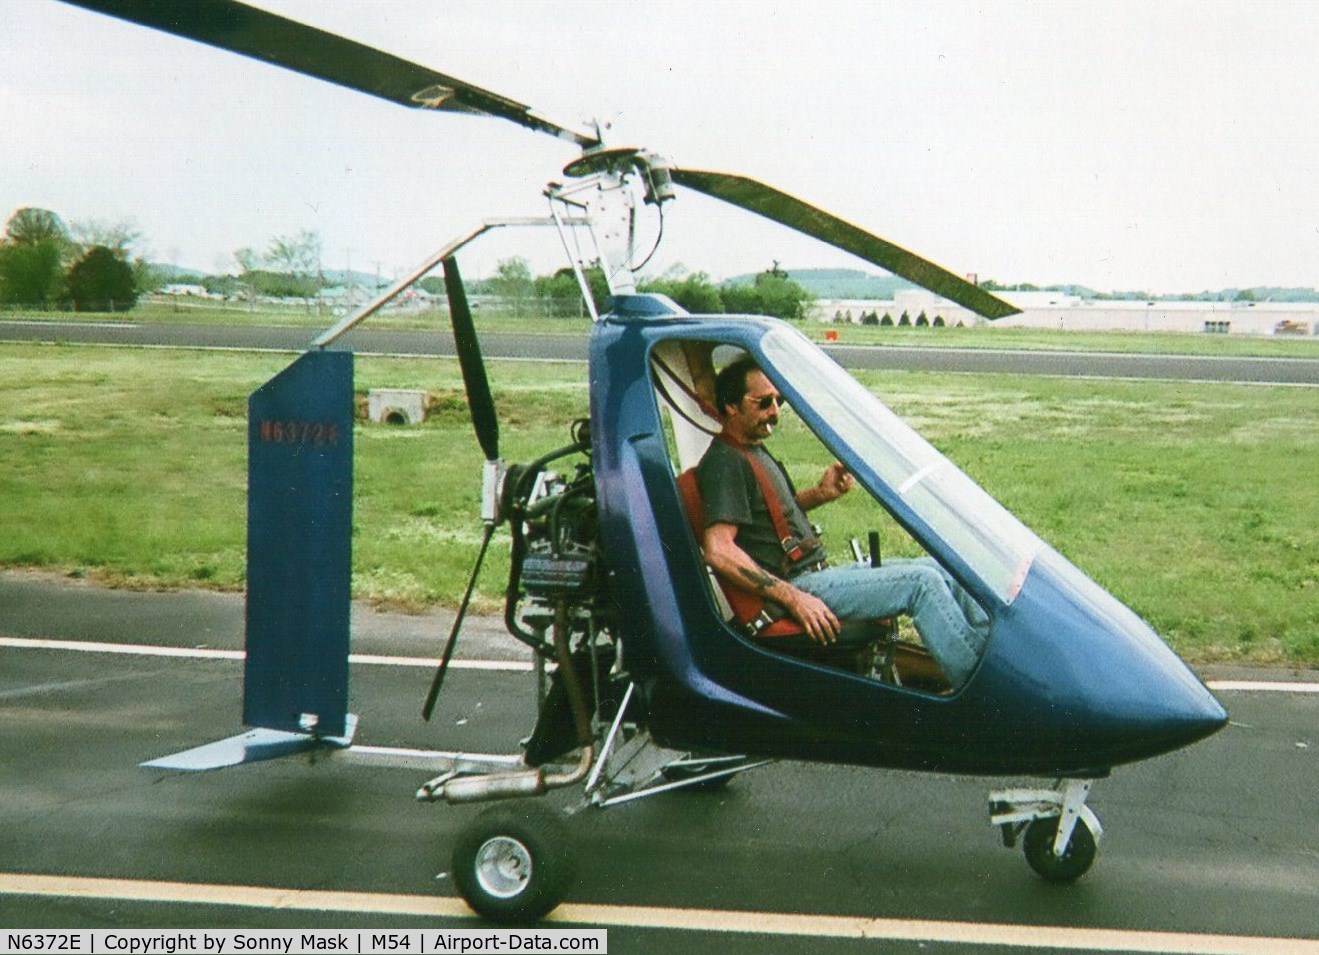 N6372E, 1997 Ellis Paul W FALCON C/N 97001, Built and test flown by Paul Ellis